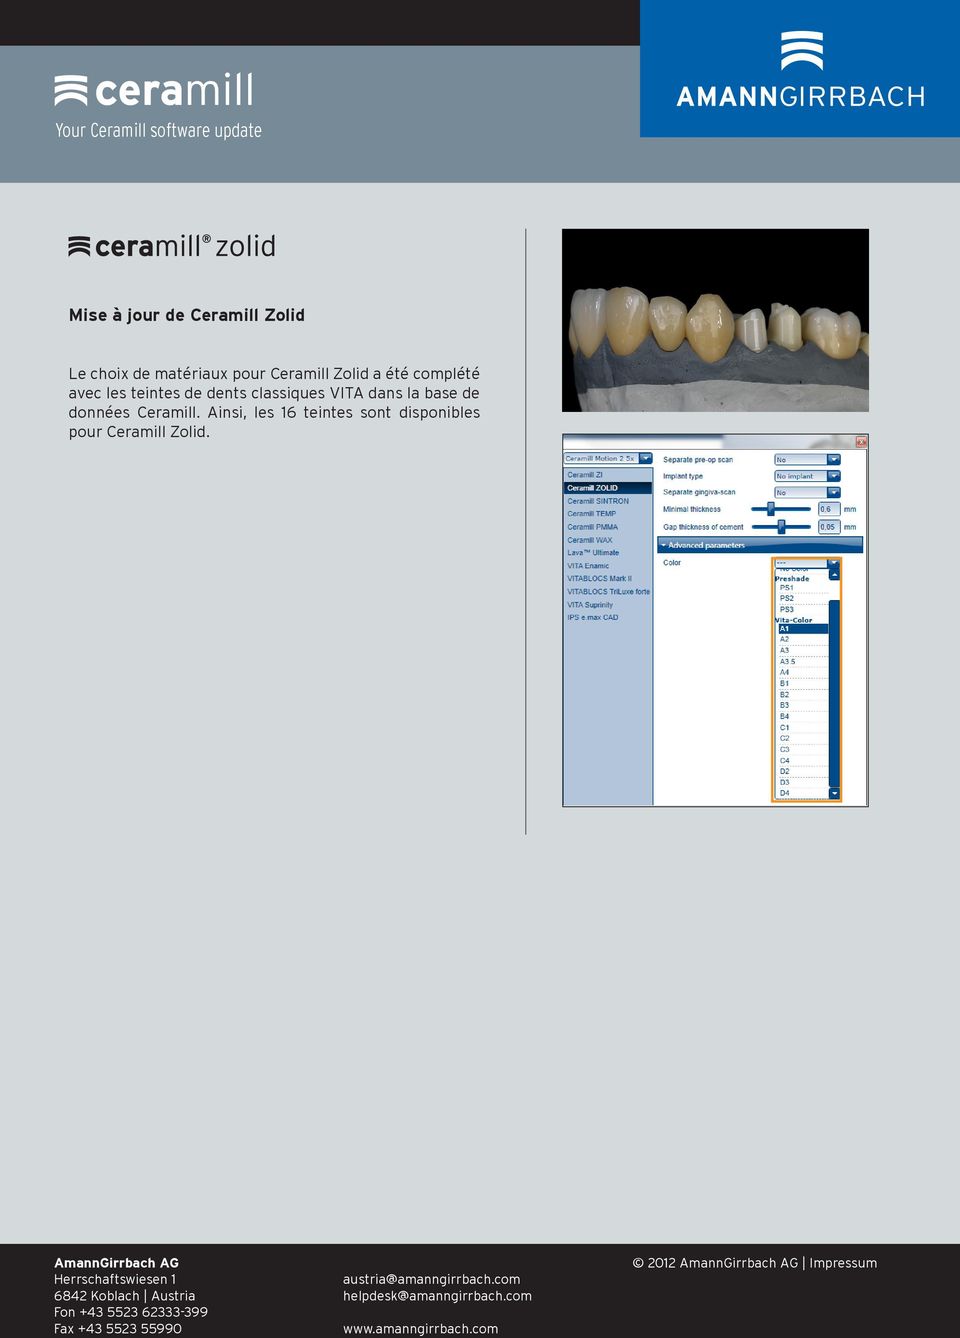 dents classiques VITA dans la base de données Ceramill.